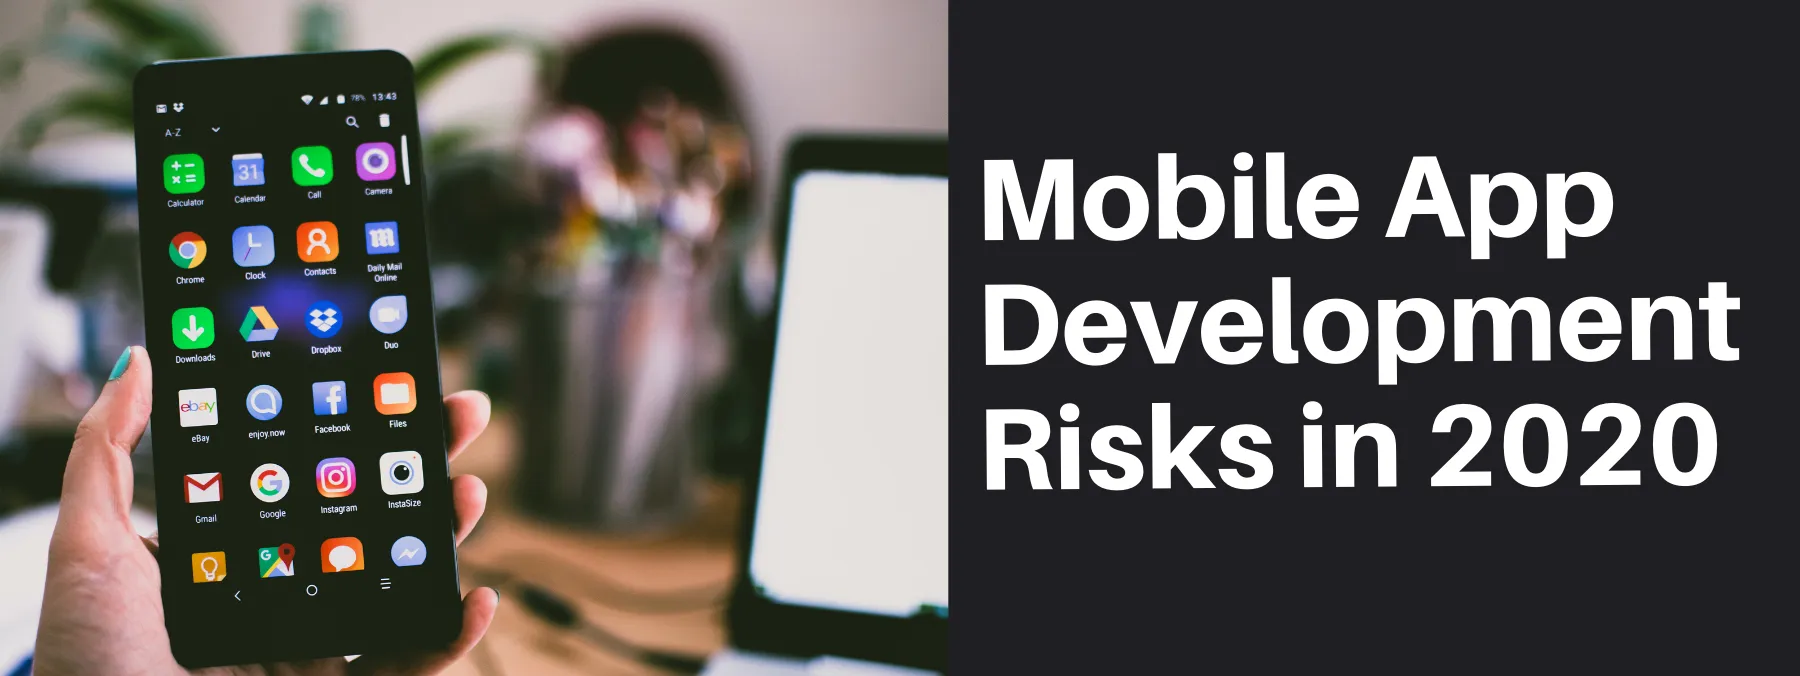 Mobile App Development Risks in 2020, reduce risk upto 80%.